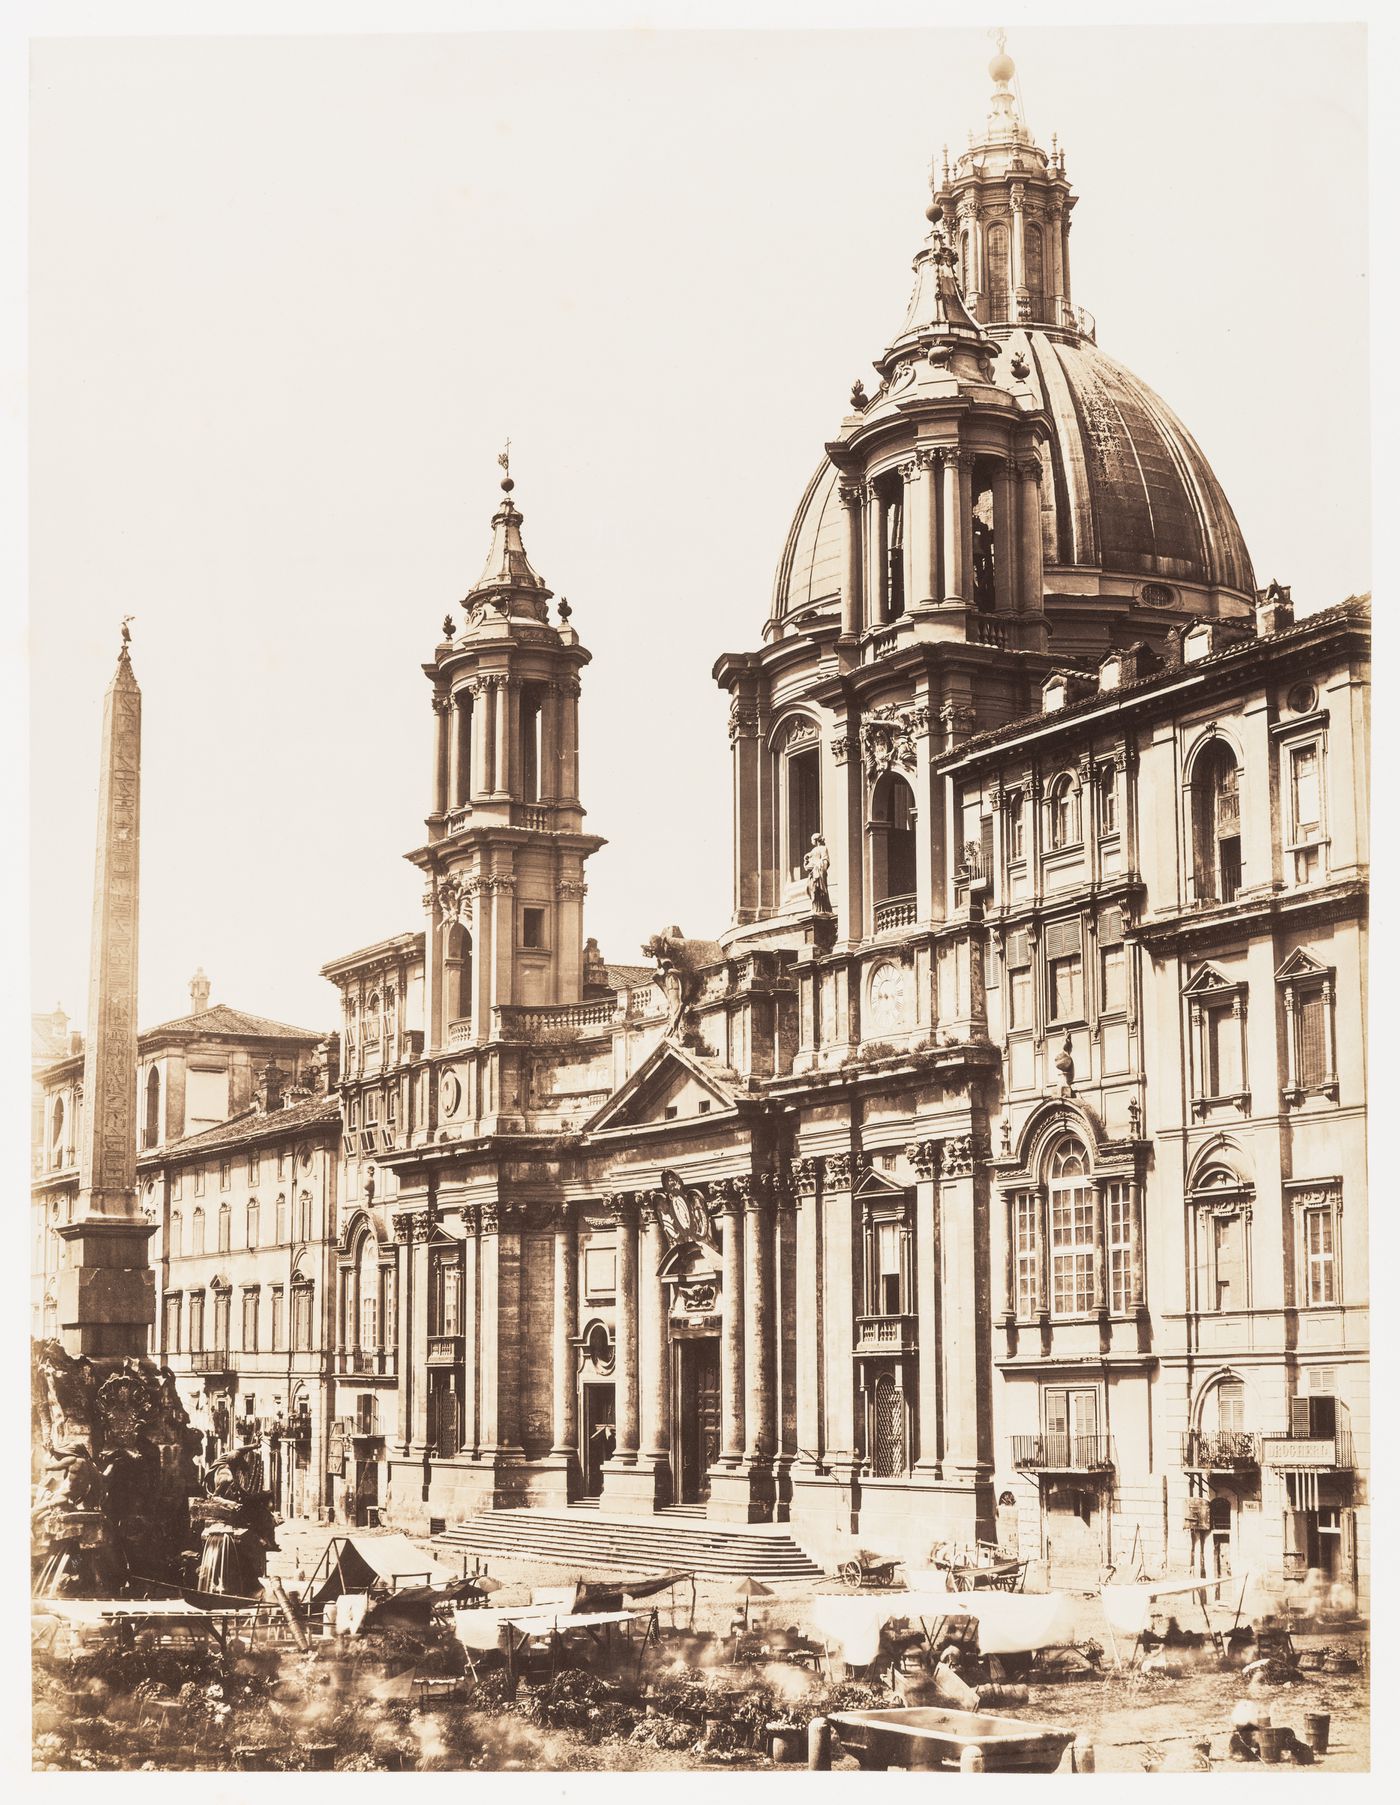 Piazza Navona; Chiesa di S. Agnese, Rome, Italy